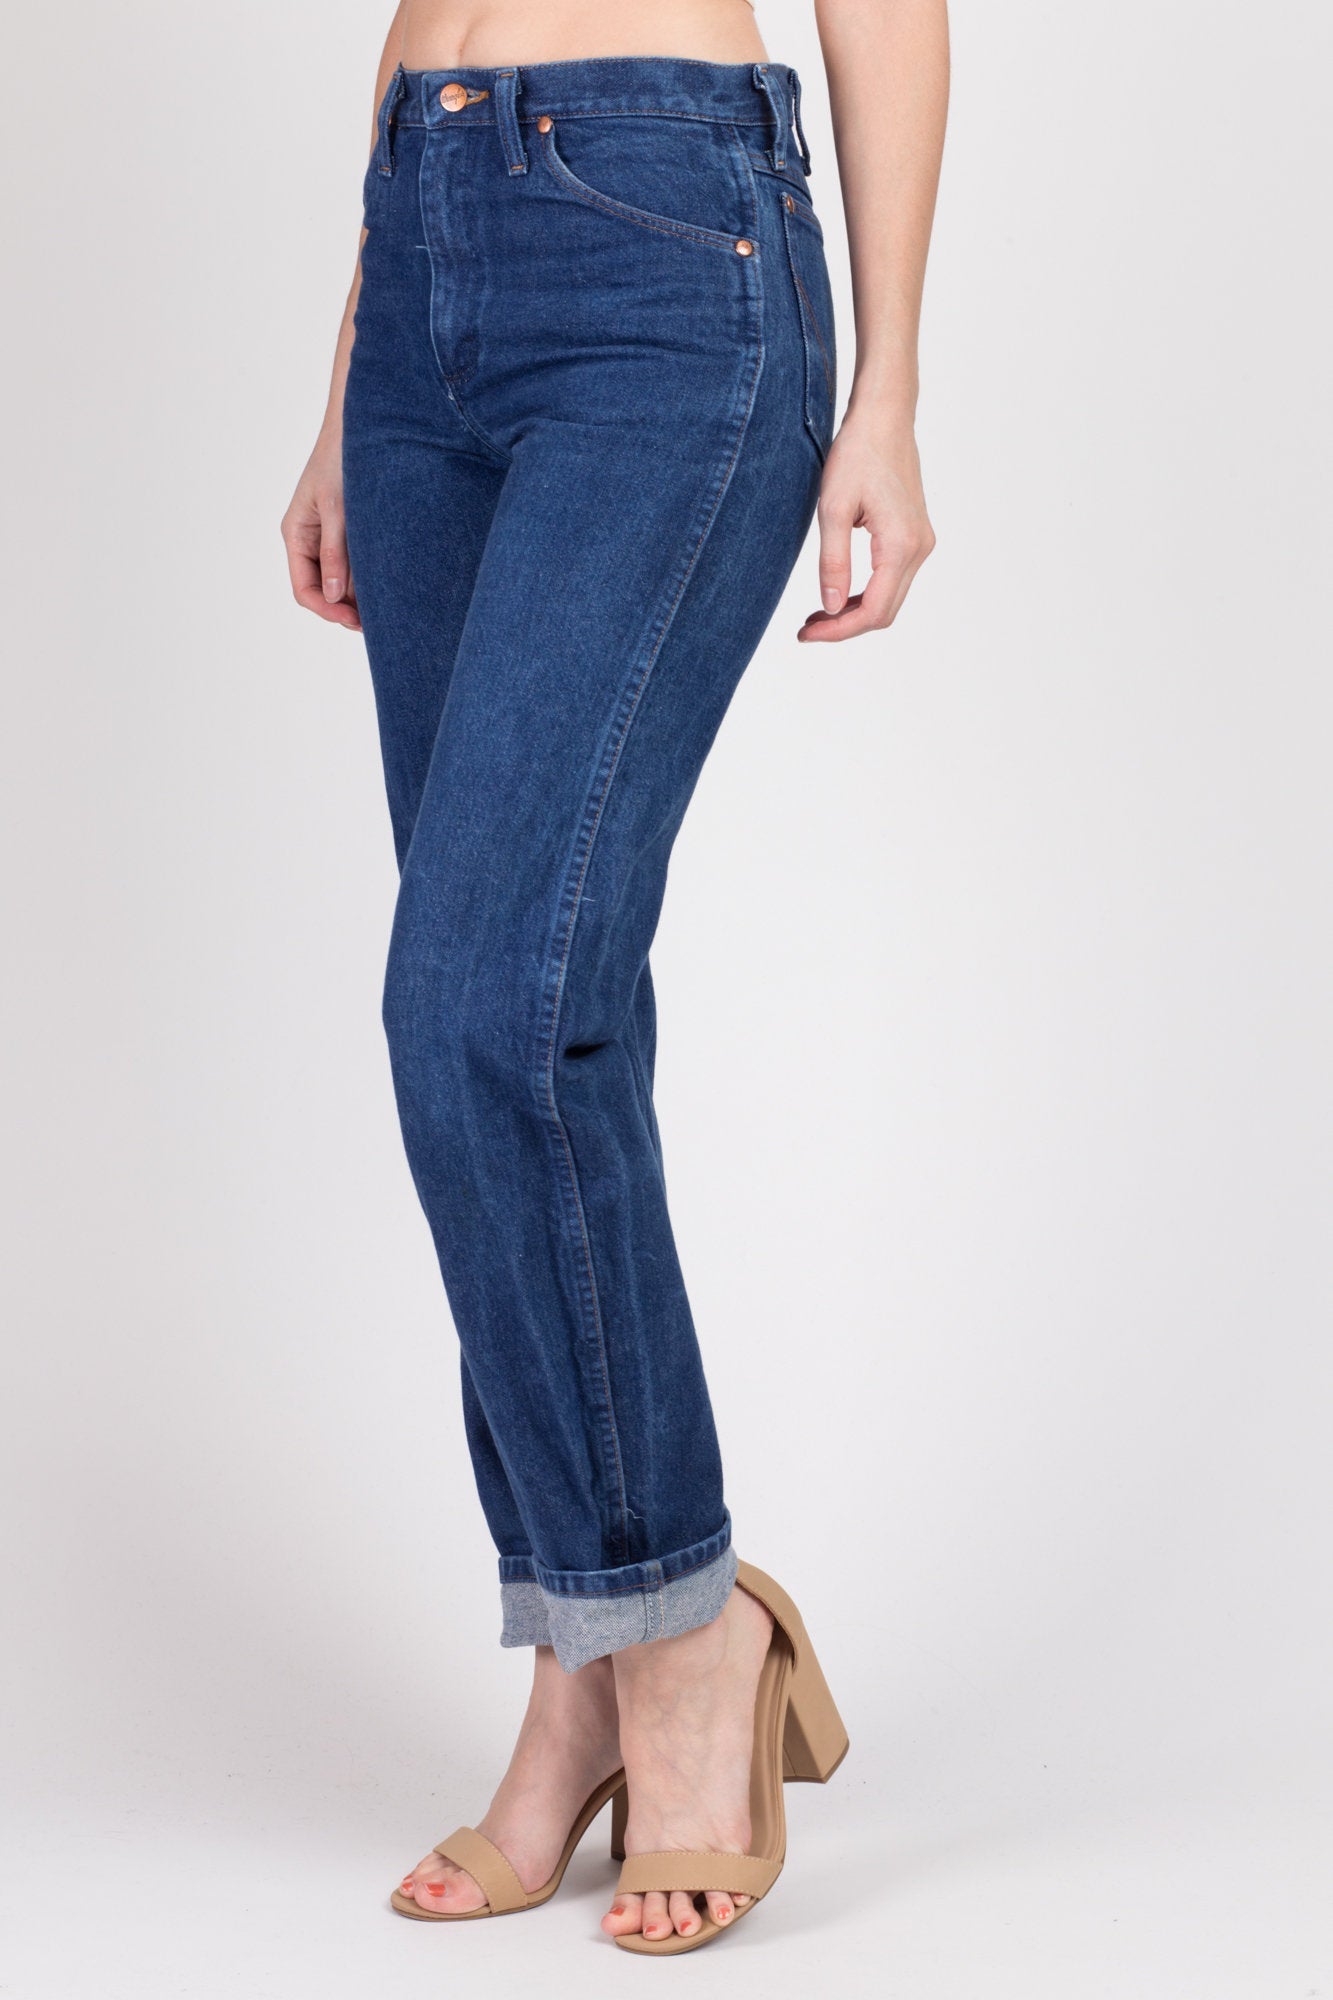 Vintage Wrangler High Waist Jeans - Small